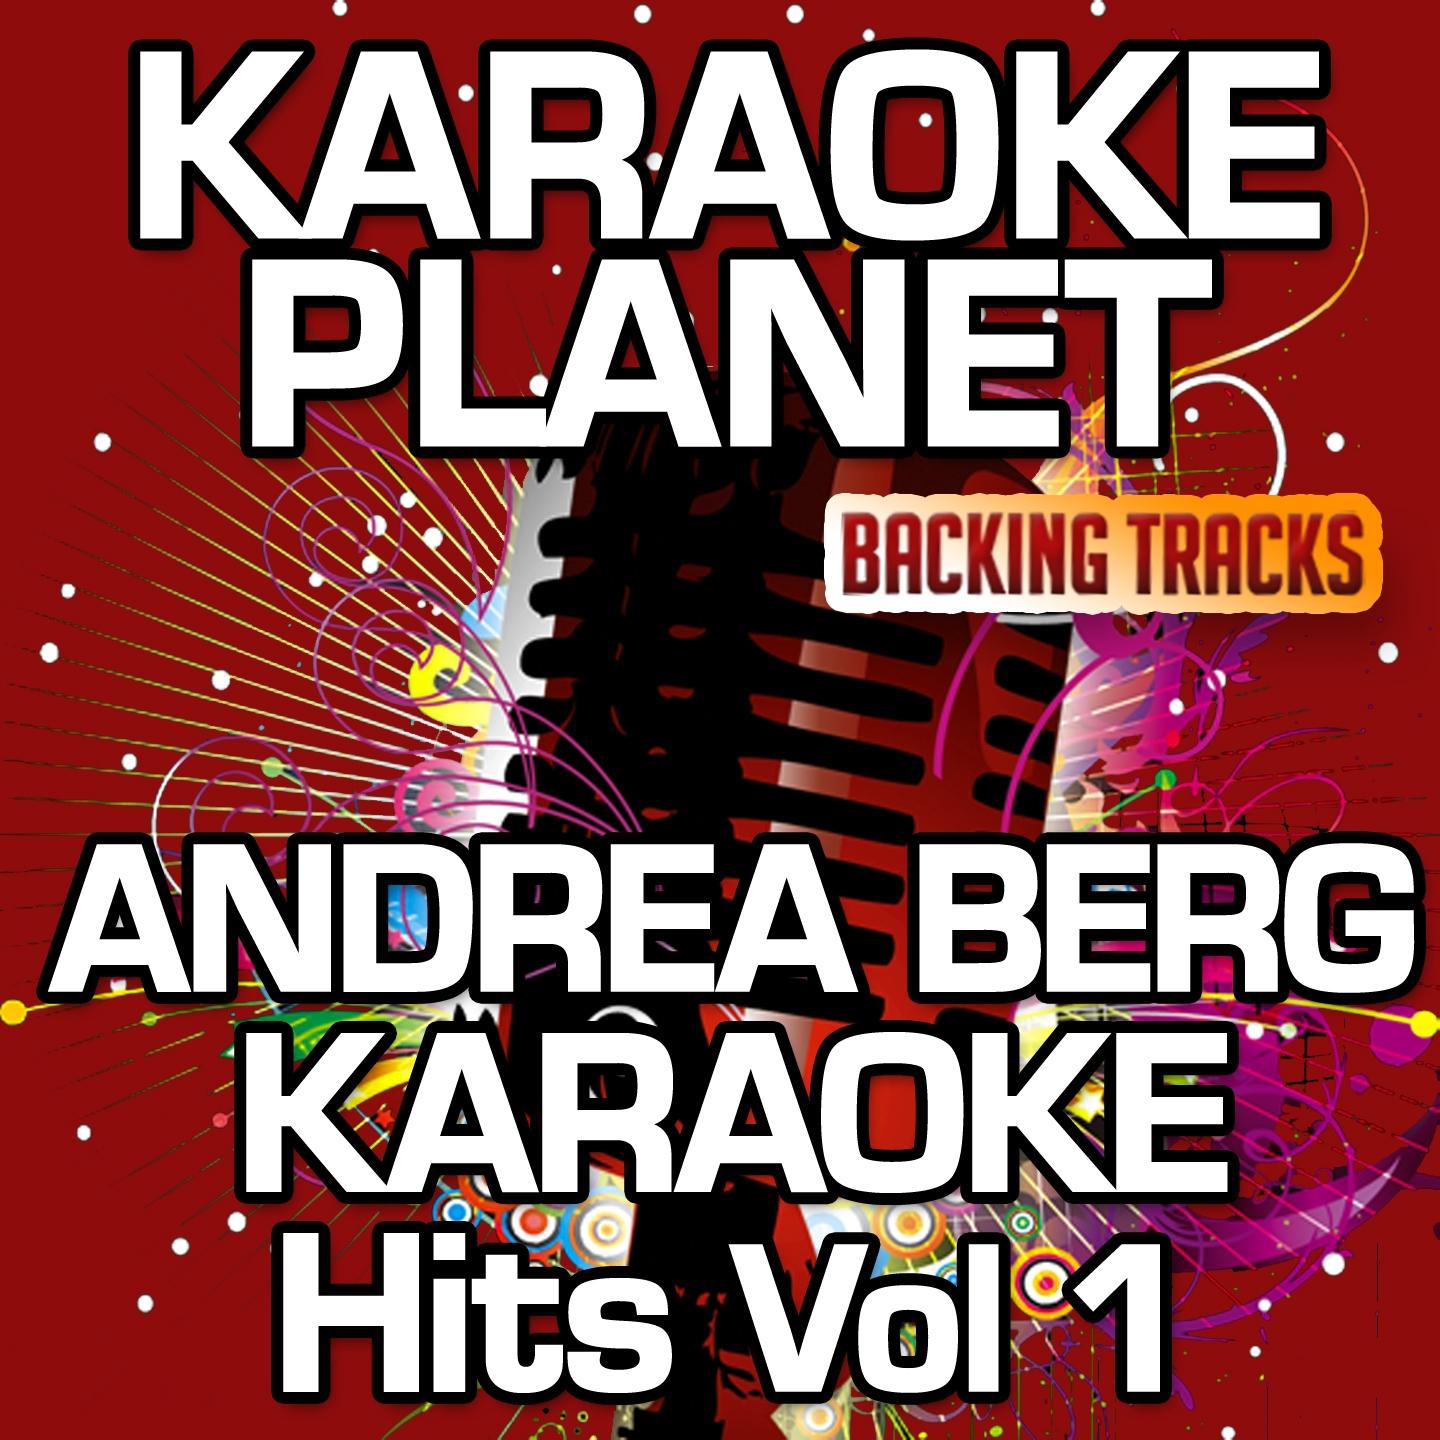 Ein Tag mit Dir im Paradies (Karaoke Version) (Originally Performed by Andrea Berg)